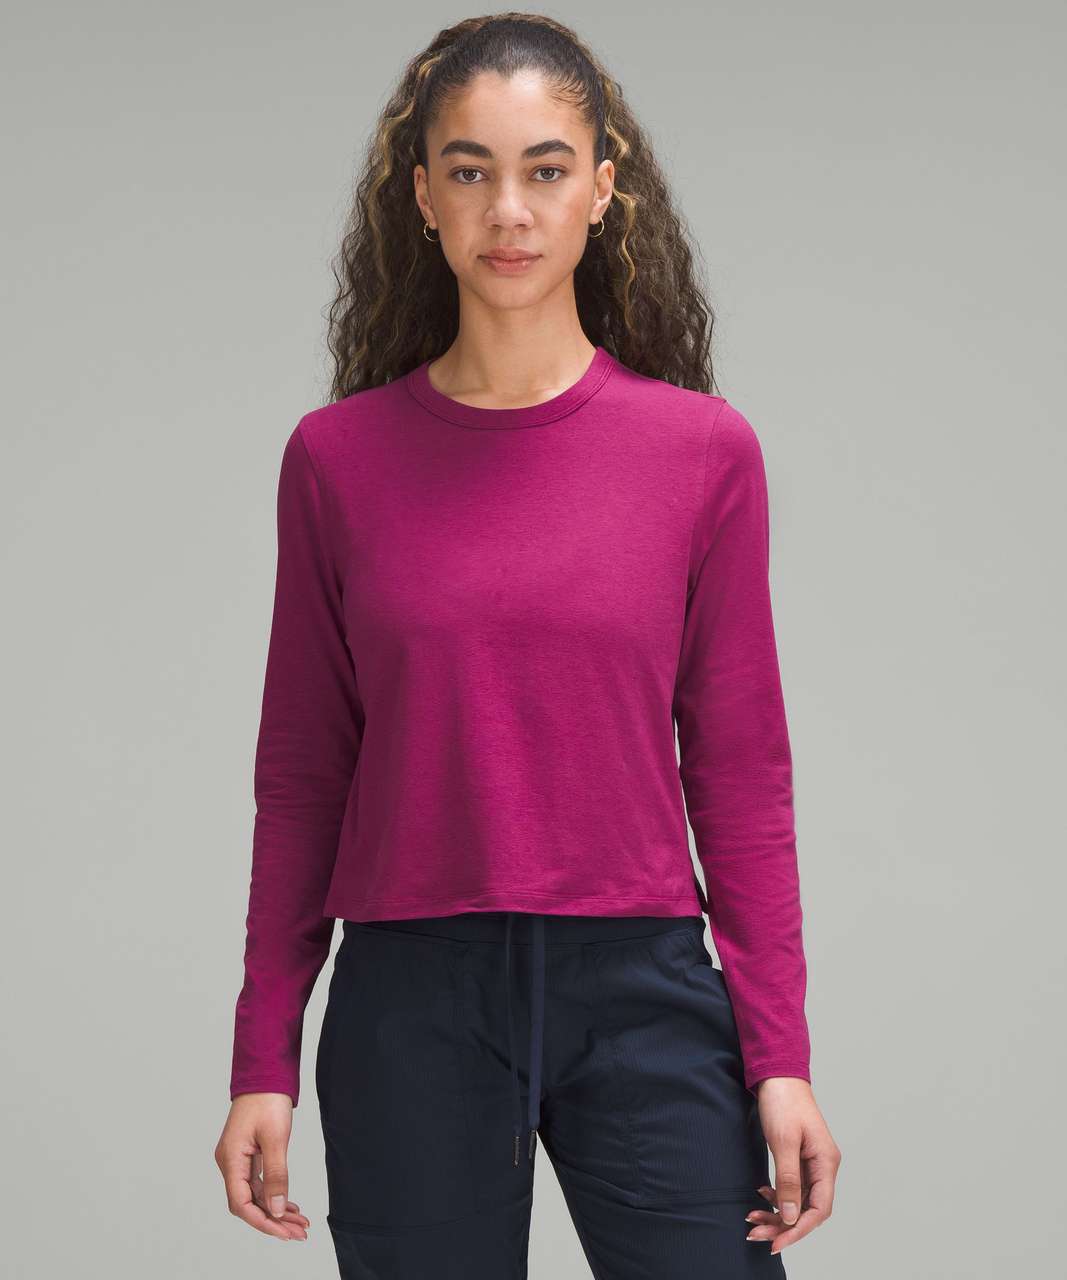 Lululemon Classic-Fit Cotton-Blend Long-Sleeve Shirt - Magenta Purple